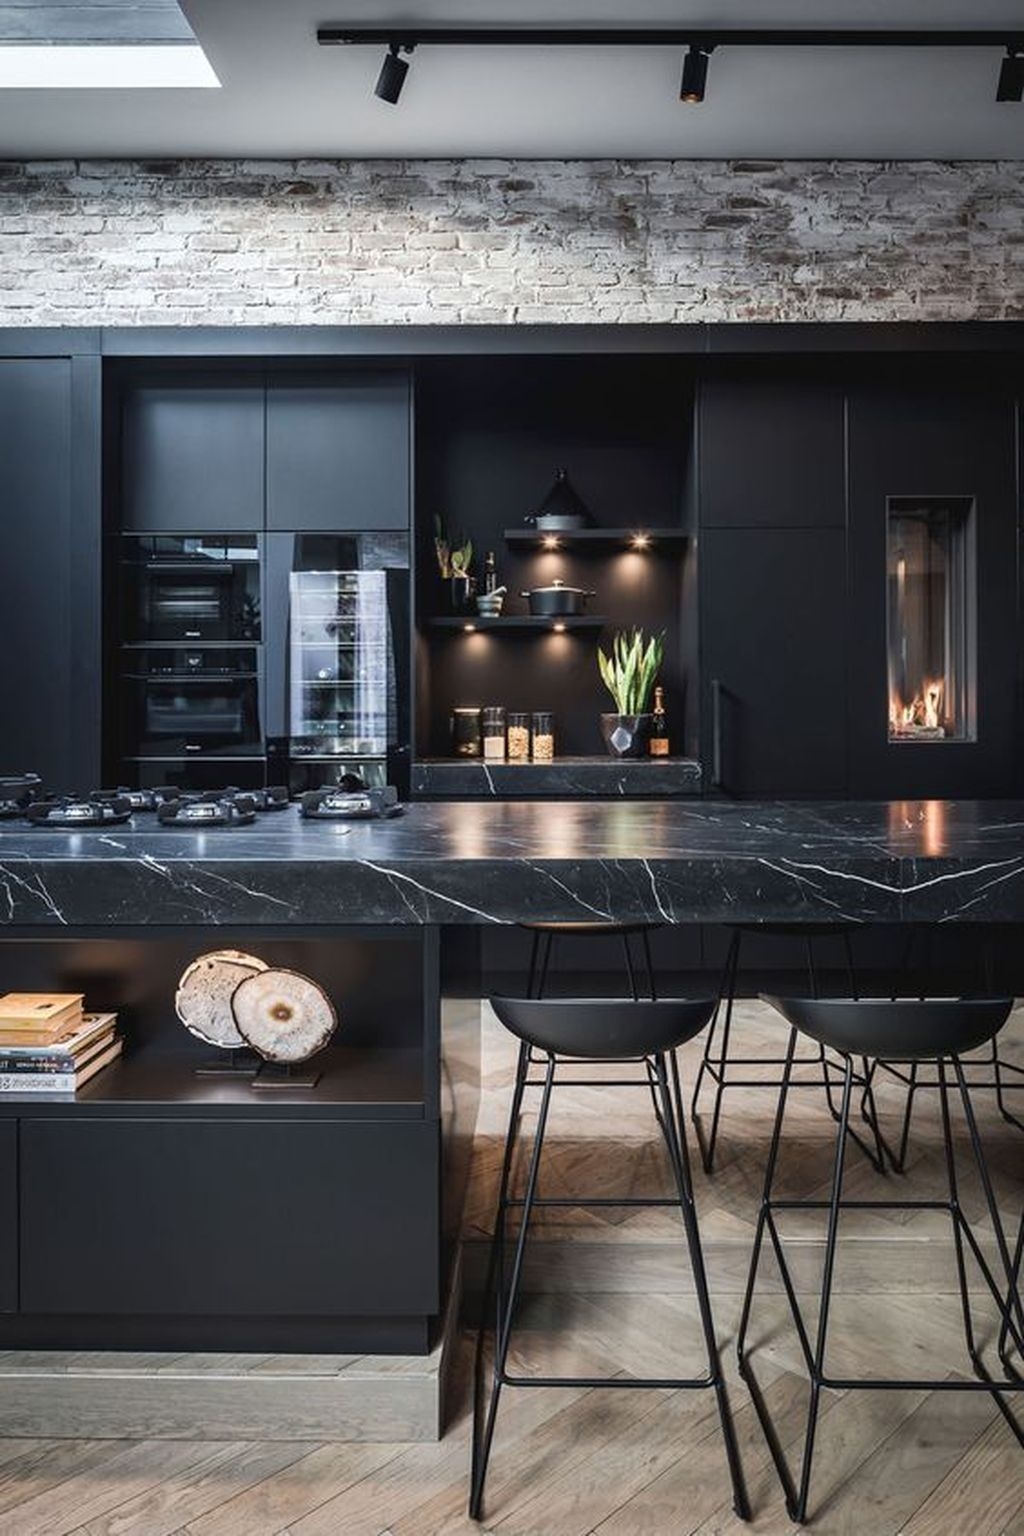 Delicate Black Kitchen Interior Design Ideas For Kitchen To Have Asap 03